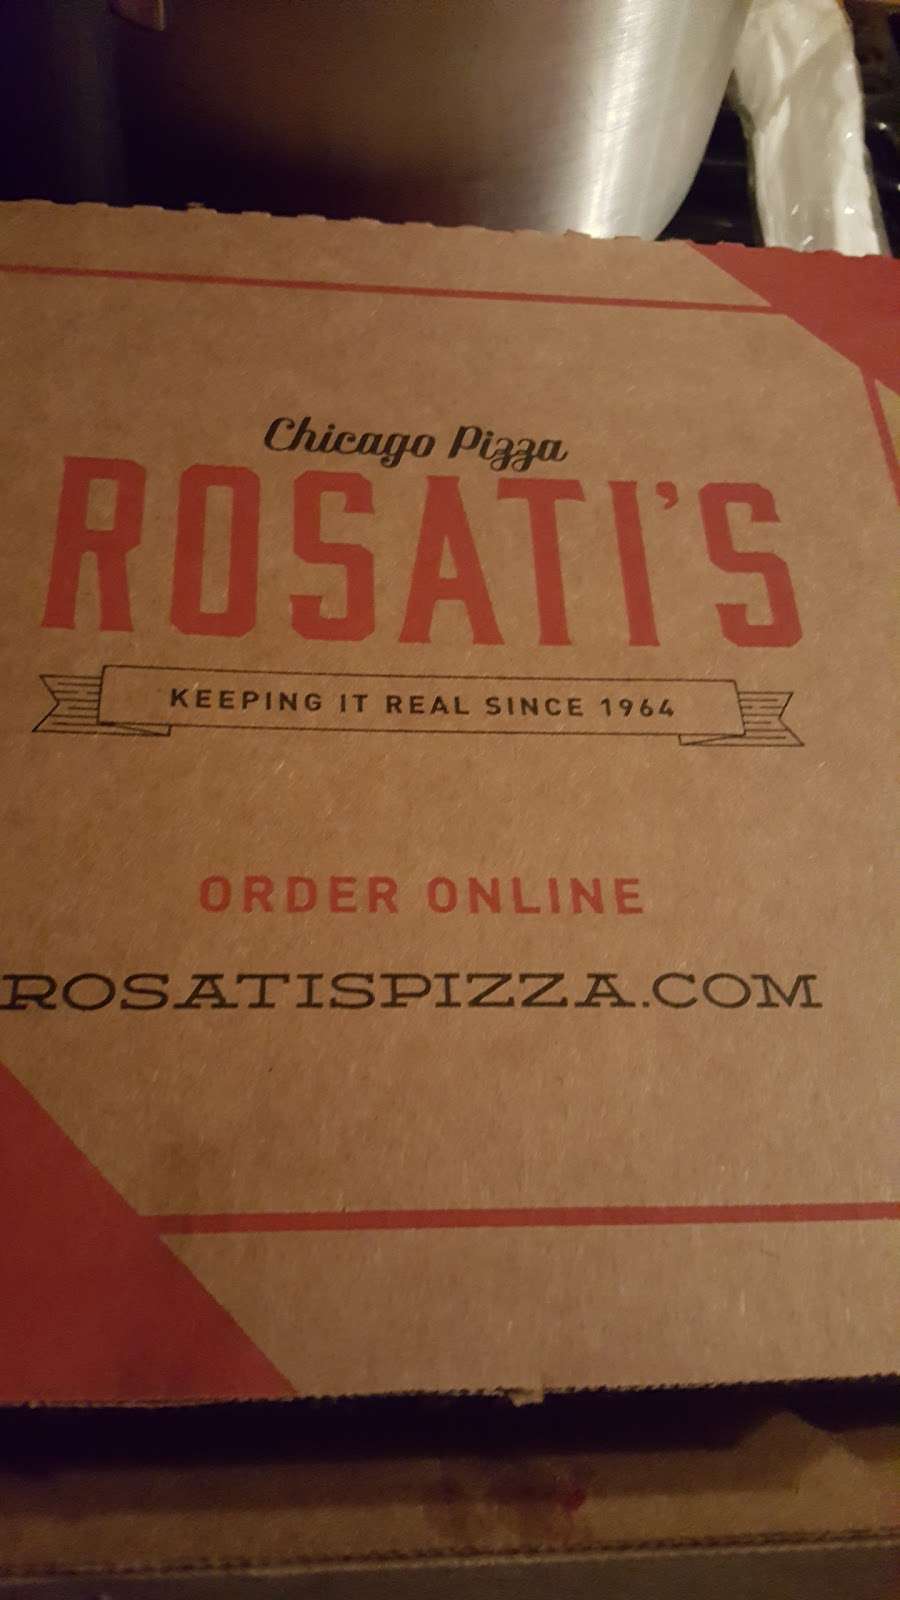 Rosatis Pizza | 3540, 40 W Terra Cotta Ave, Crystal Lake, IL 60014 | Phone: (815) 477-0888